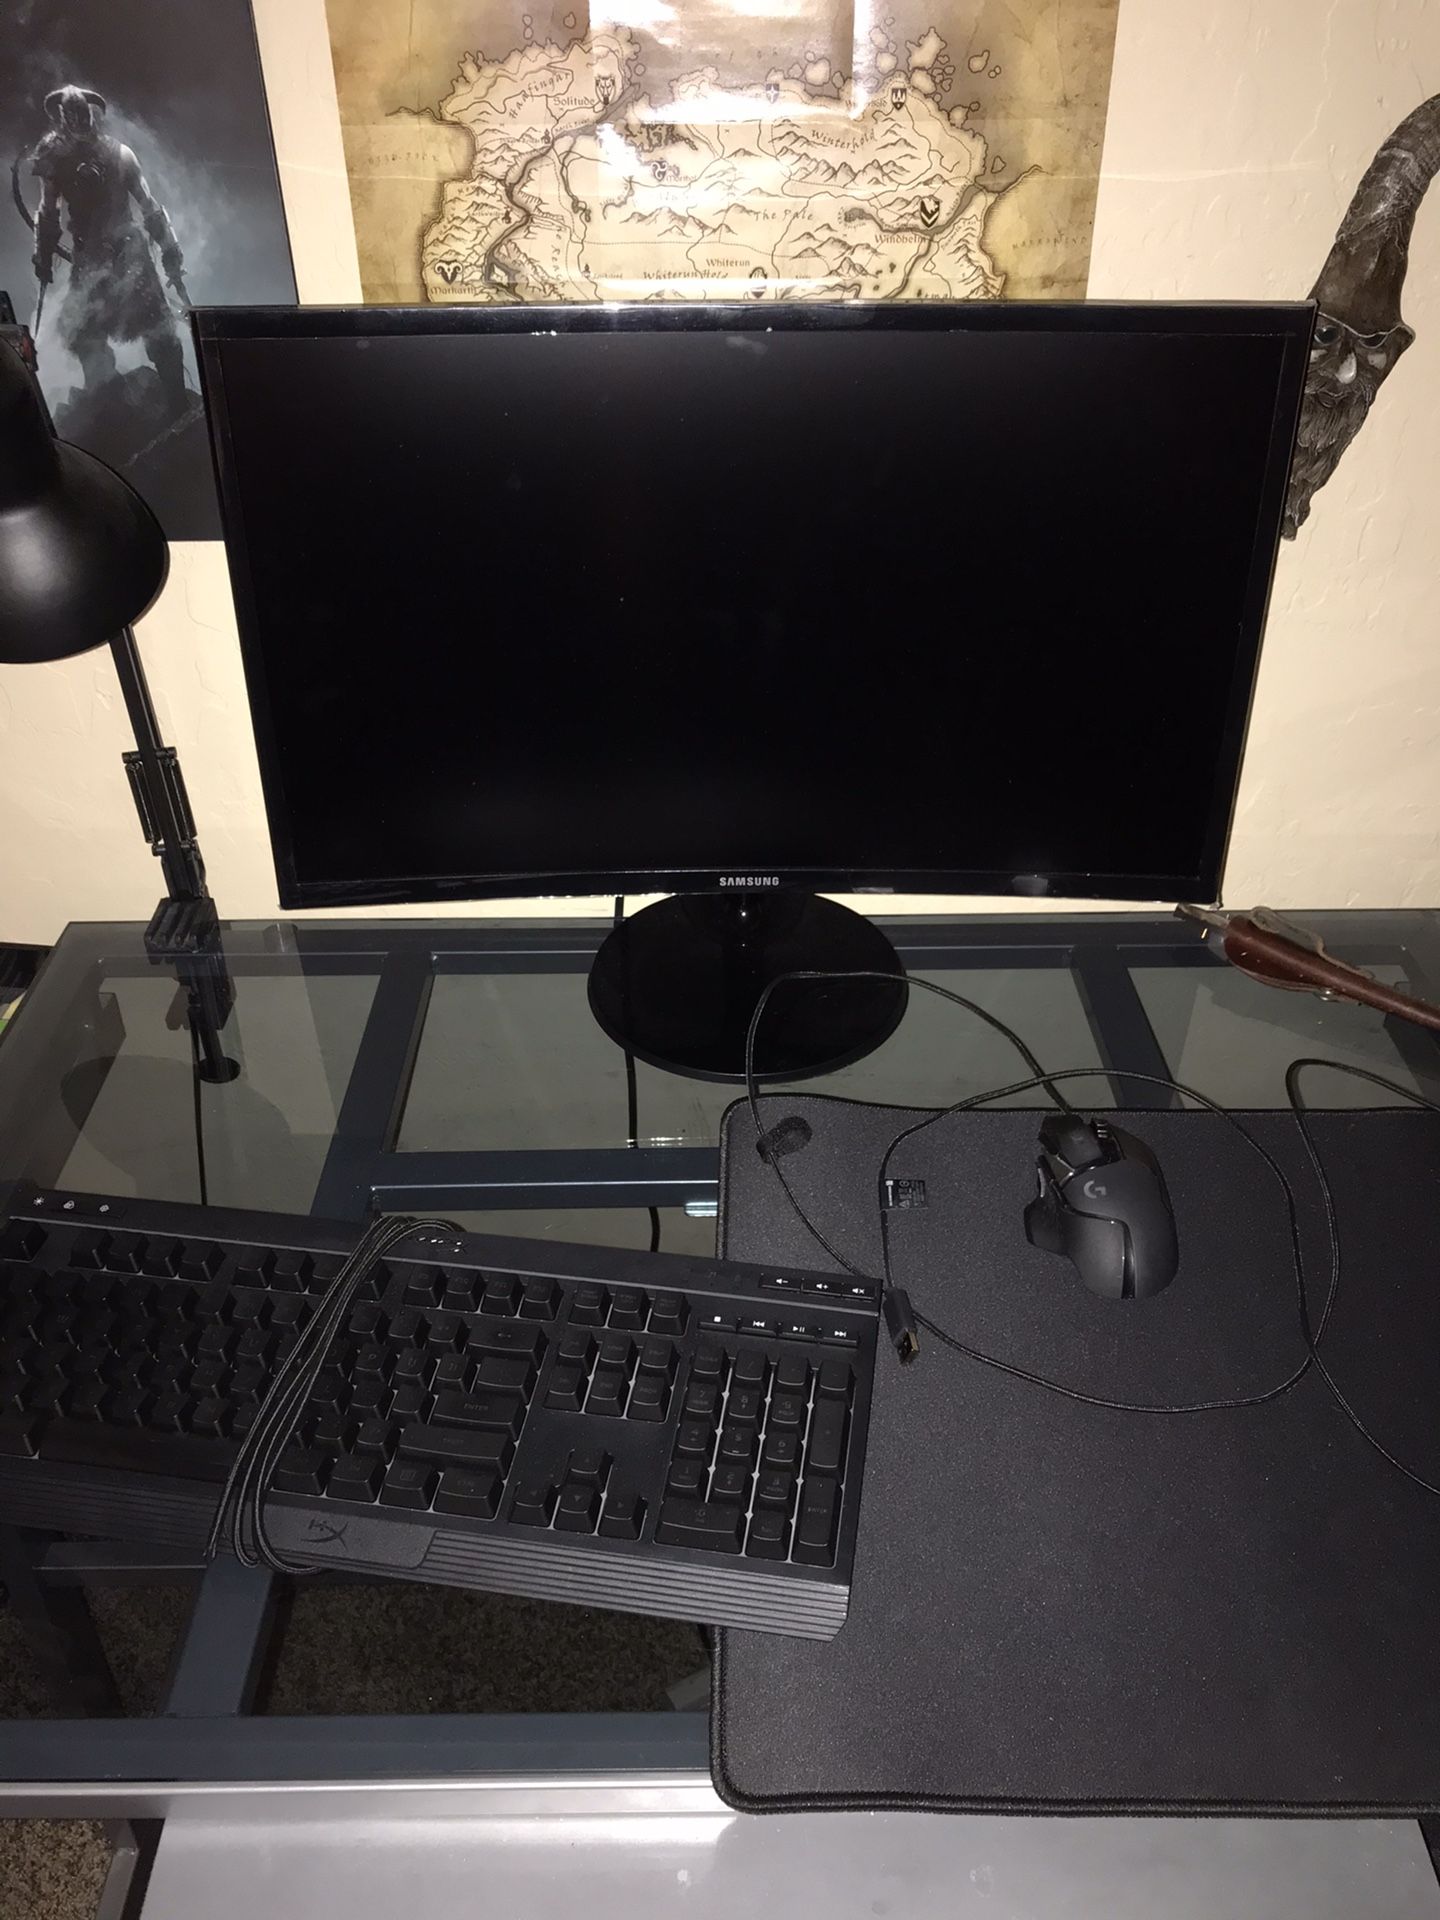 Hyper x professional gaming setup ( Monitor , KBAM and gamepad )